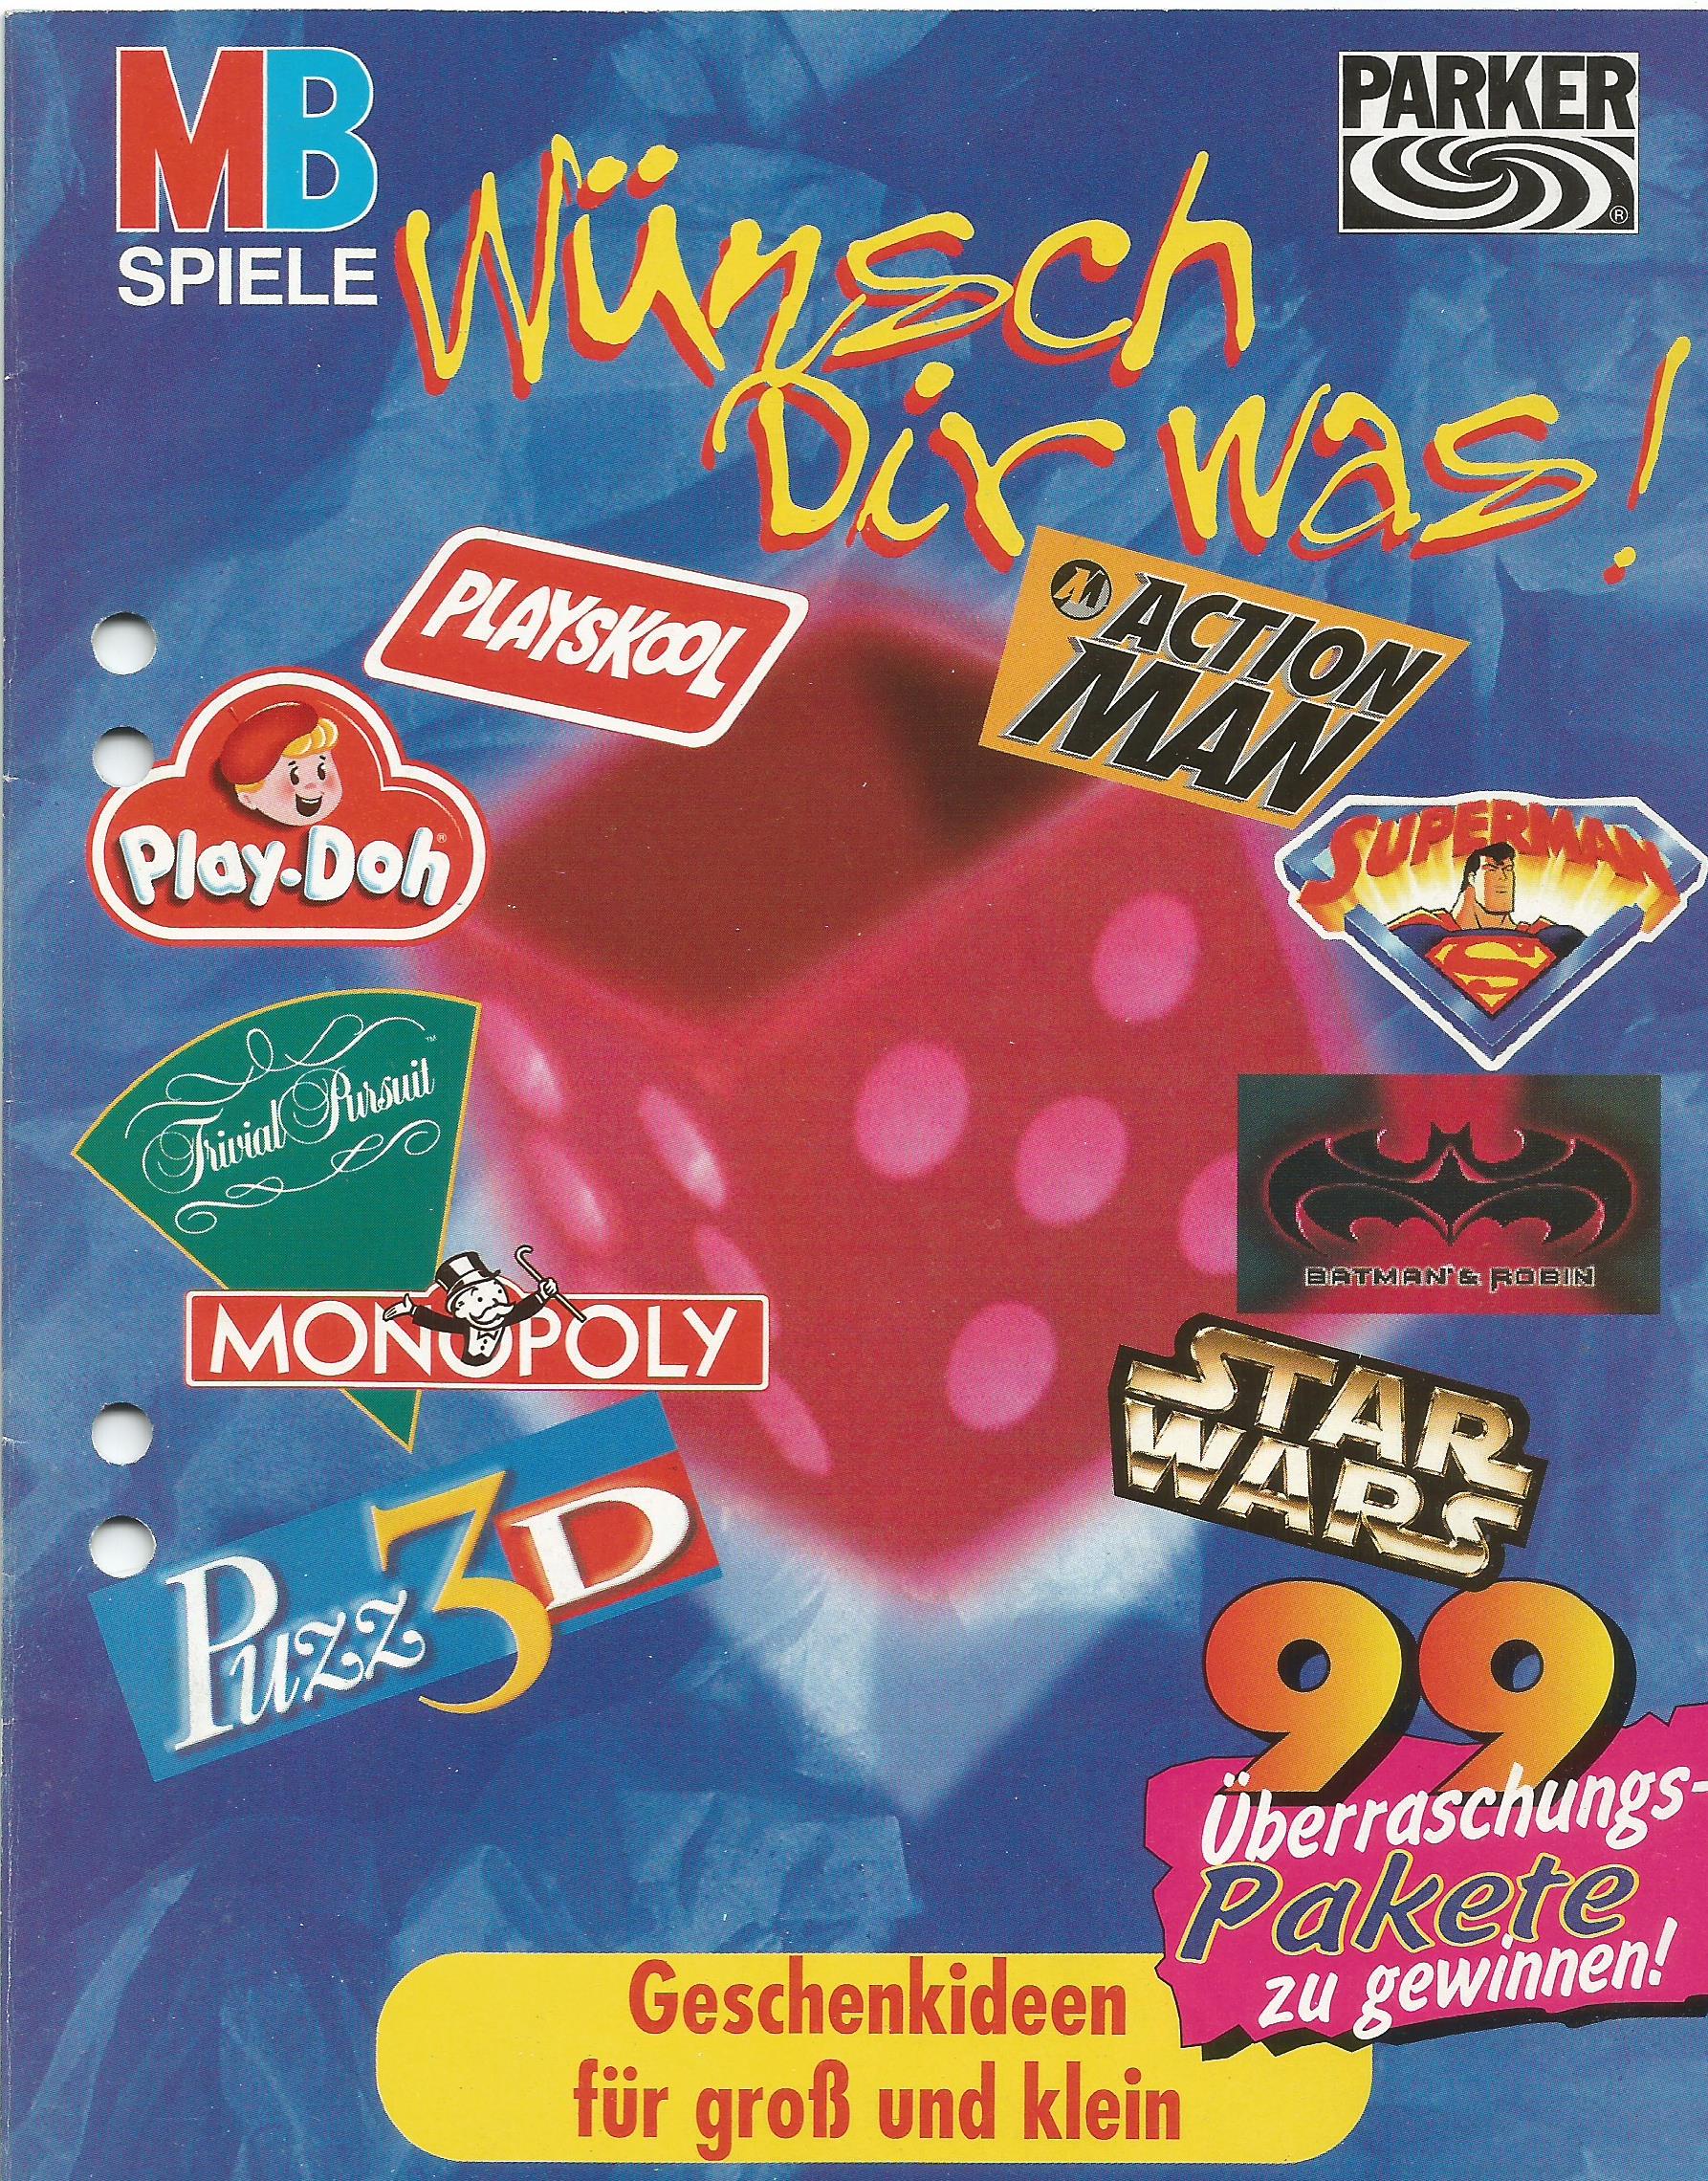 1997-es MB-Parker német játékkatalógus